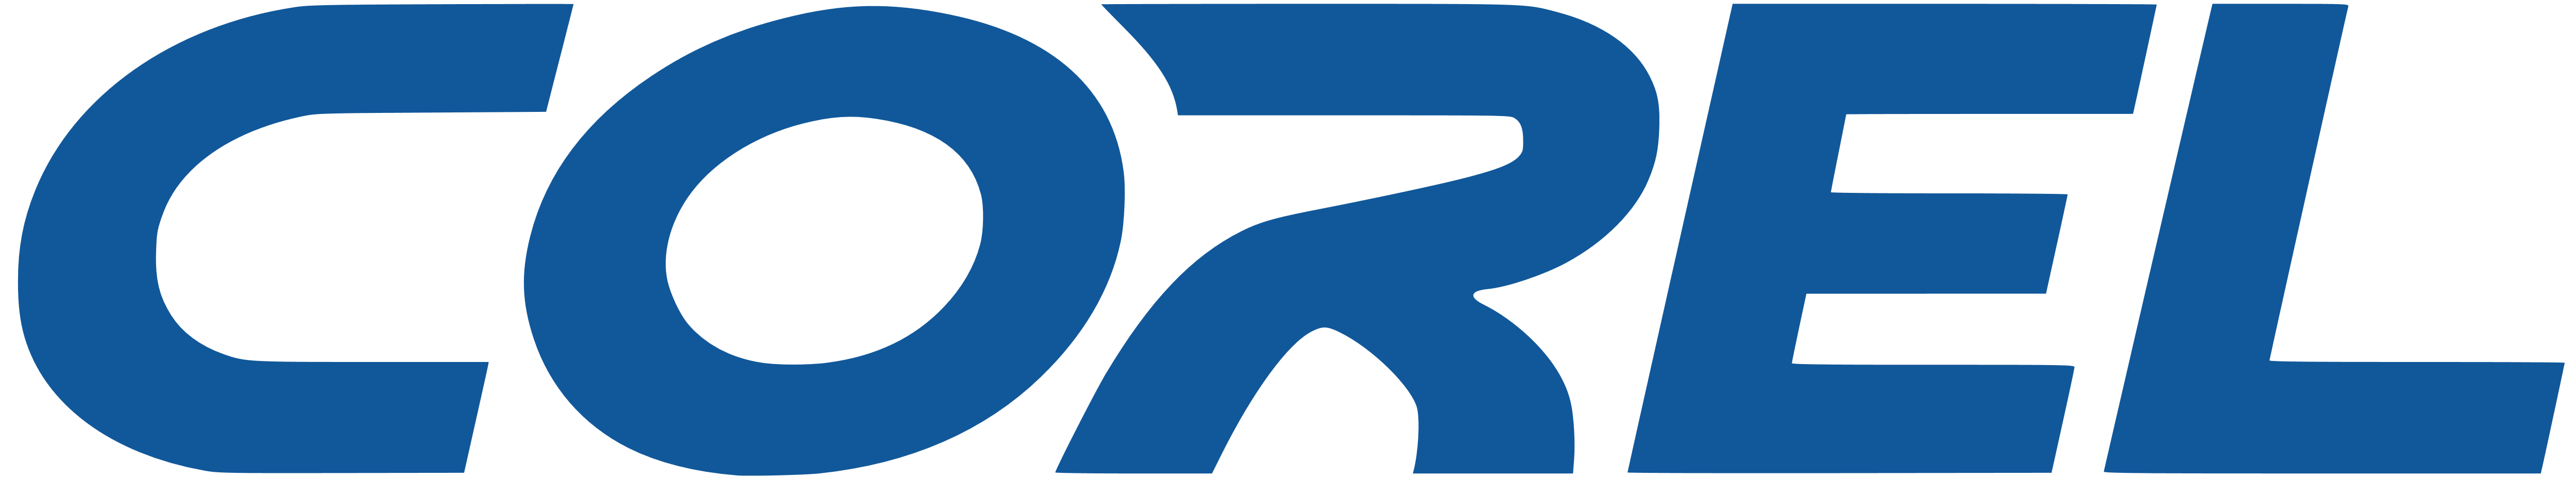 Corel Logo - Corel – Logos Download